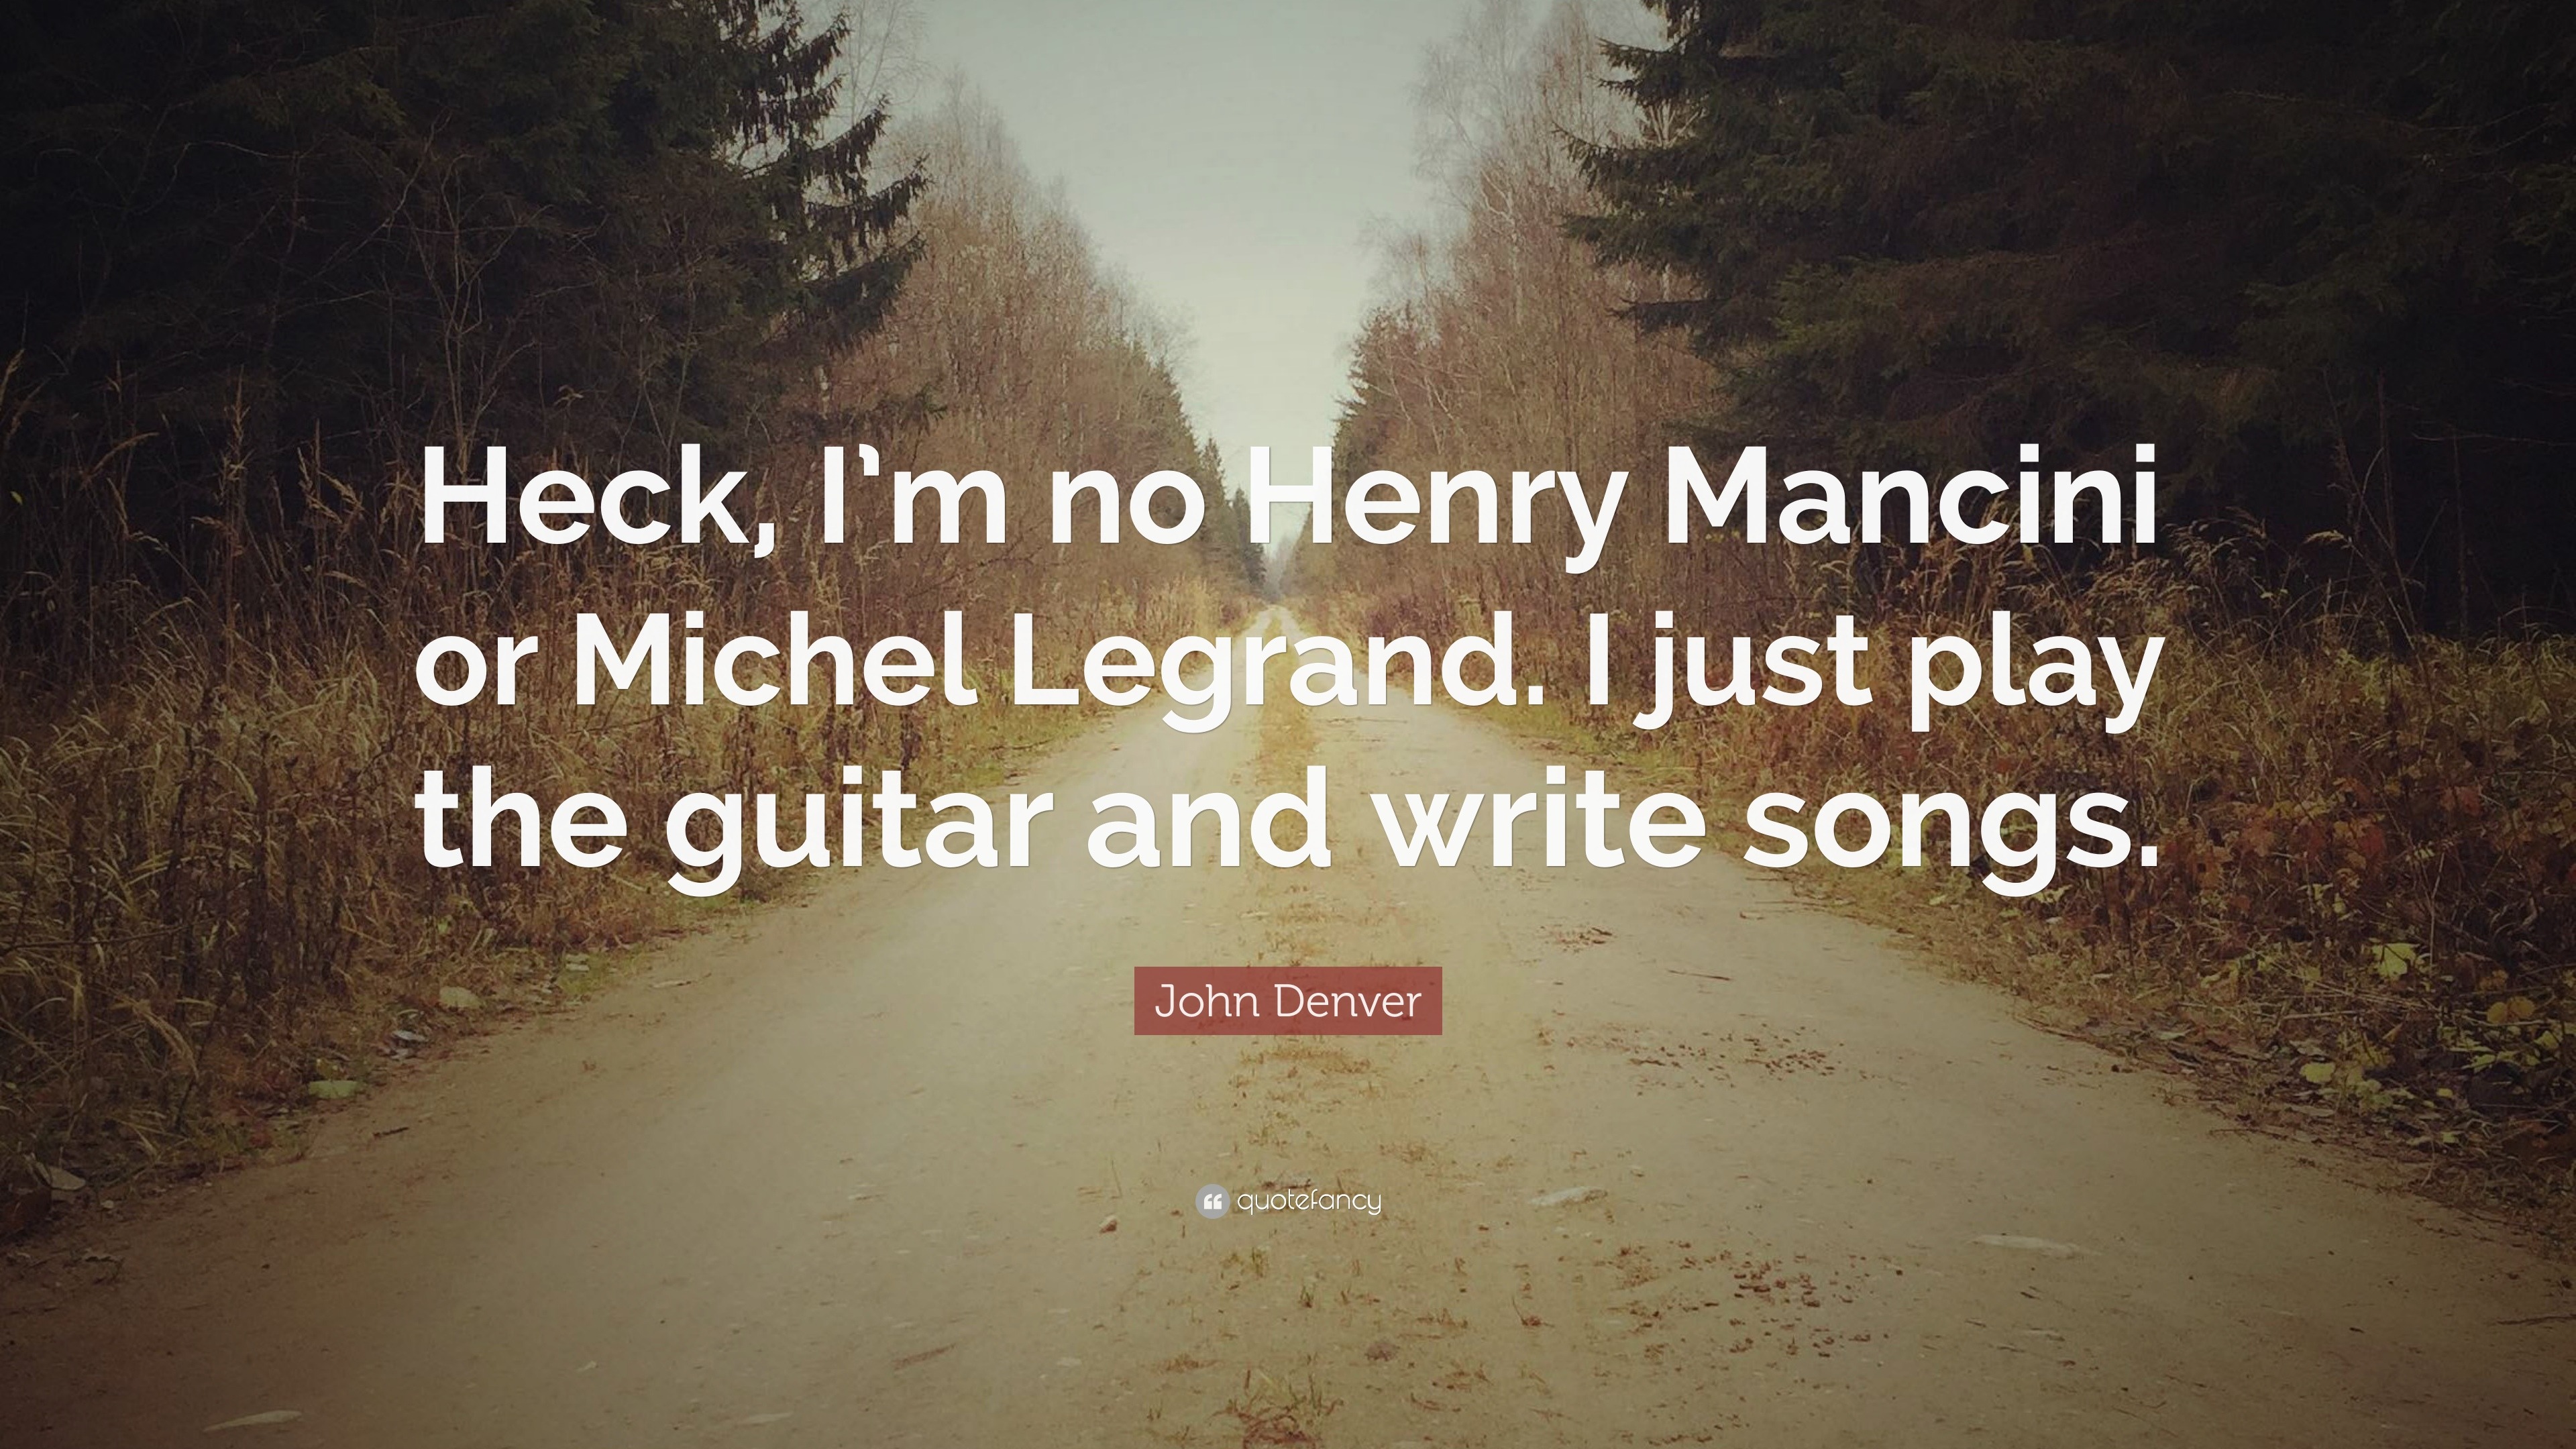 John Denver Quote “Heck, I’m no Henry Mancini or Michel Legrand. I